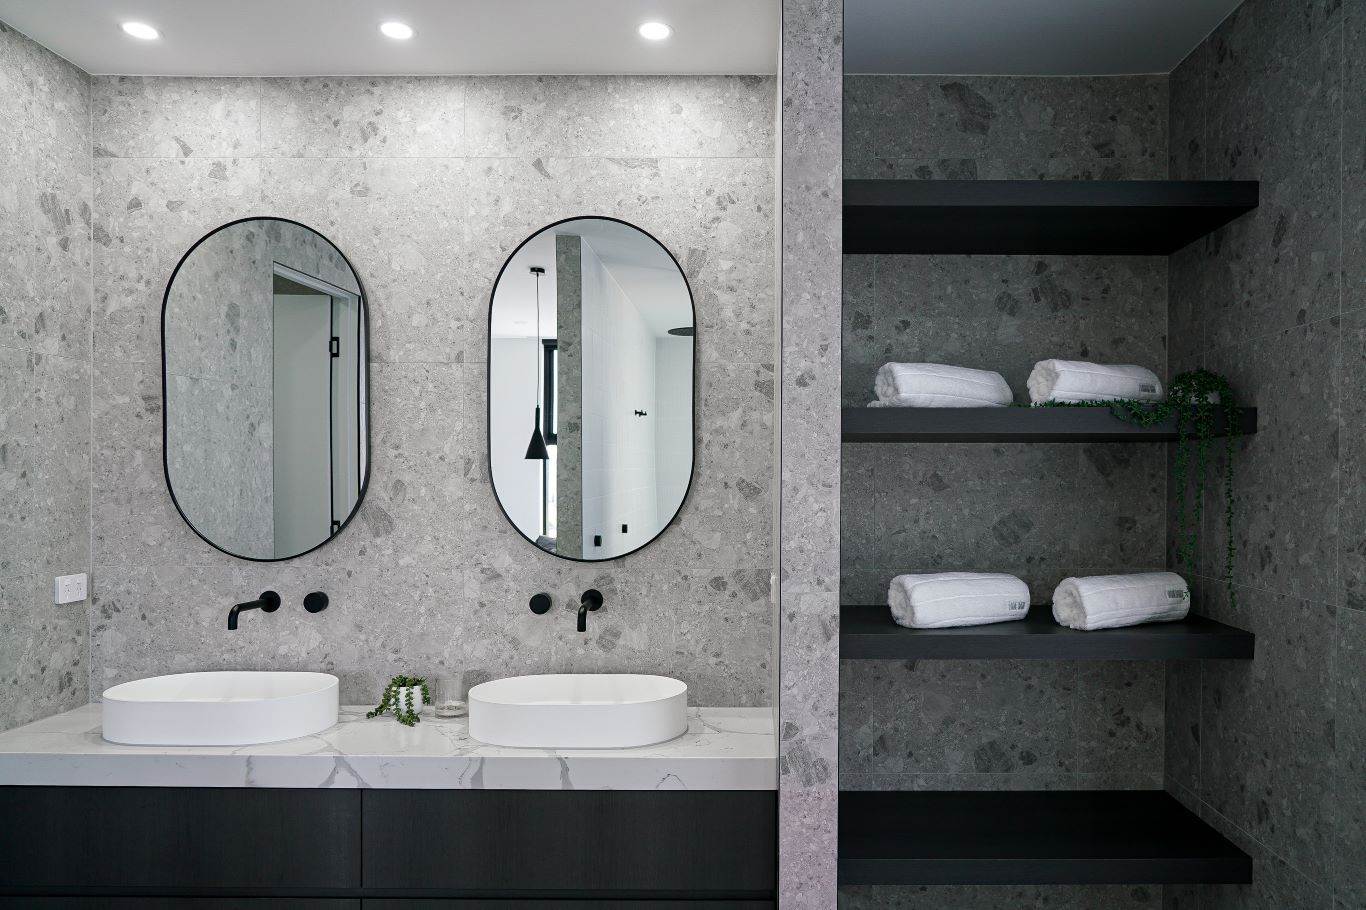 Bathroom with modern porcelain tiles